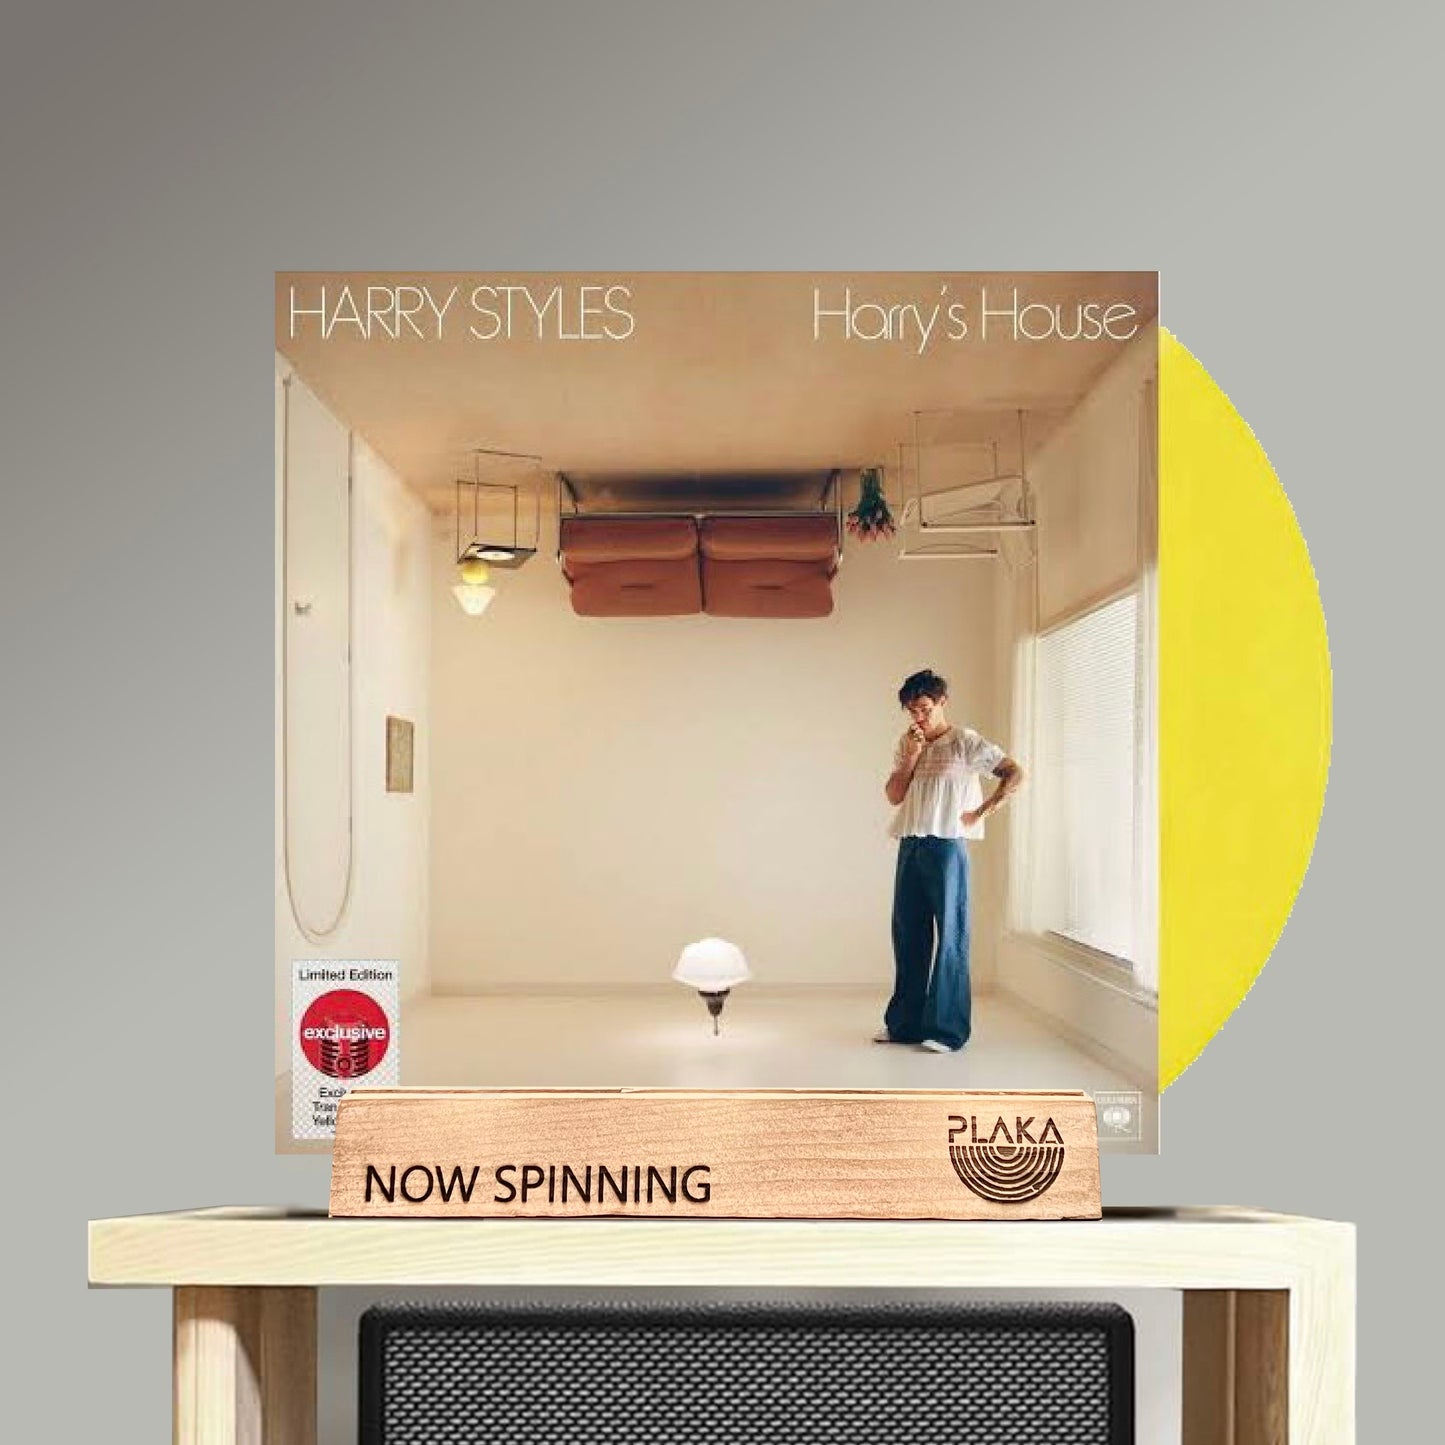 Harry Styles - Harry's House